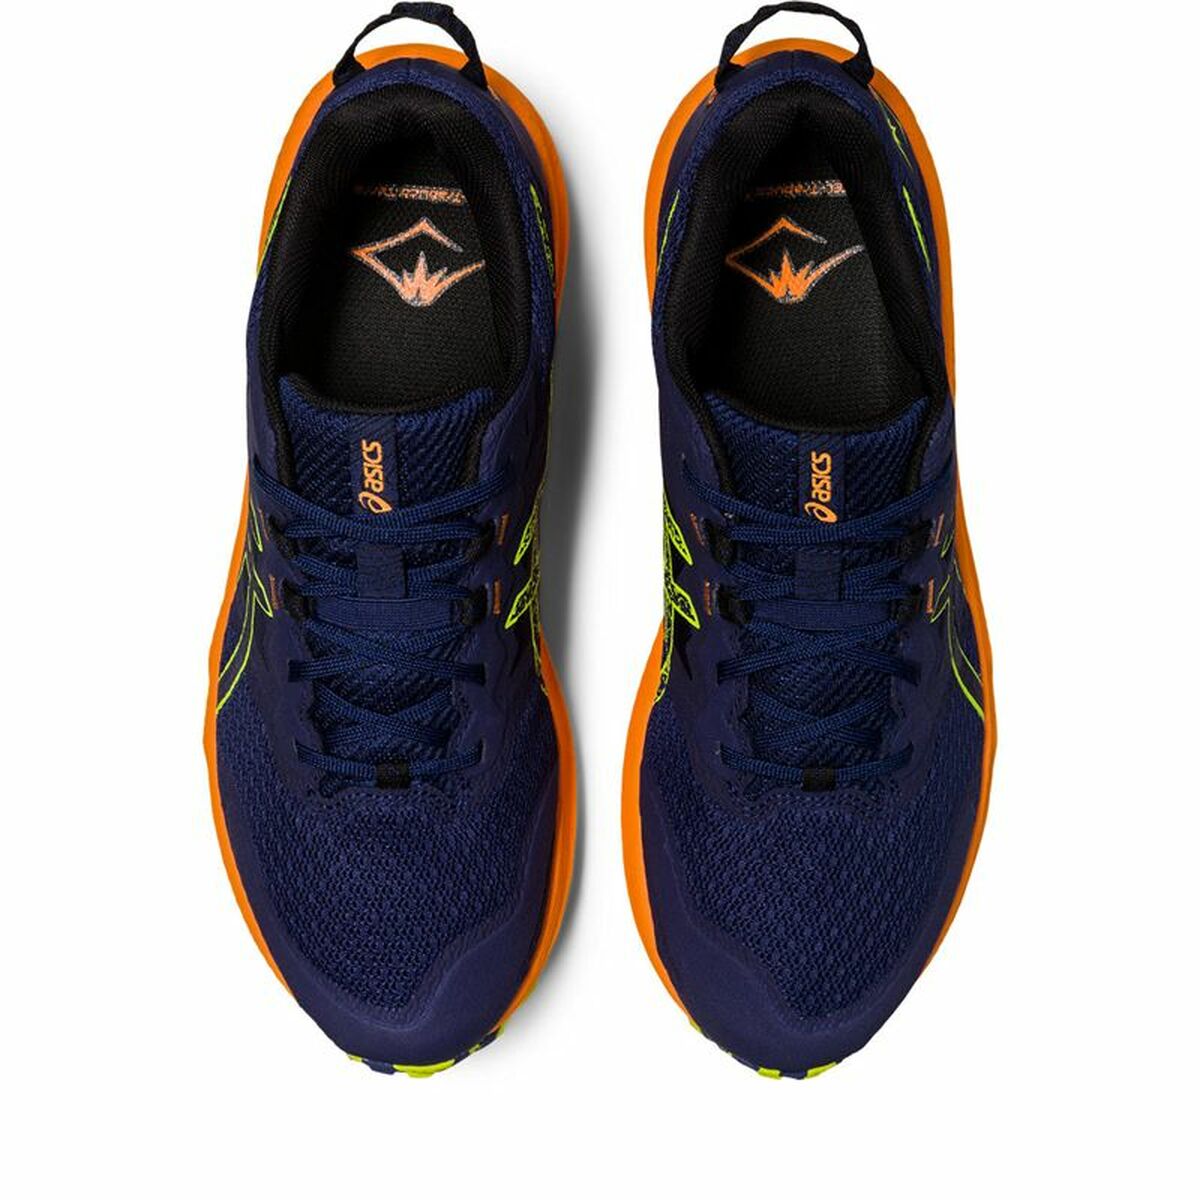 Chaussures de Running pour Adultes Asics Trabuco Terra 2 Montagne Homme Blue marine